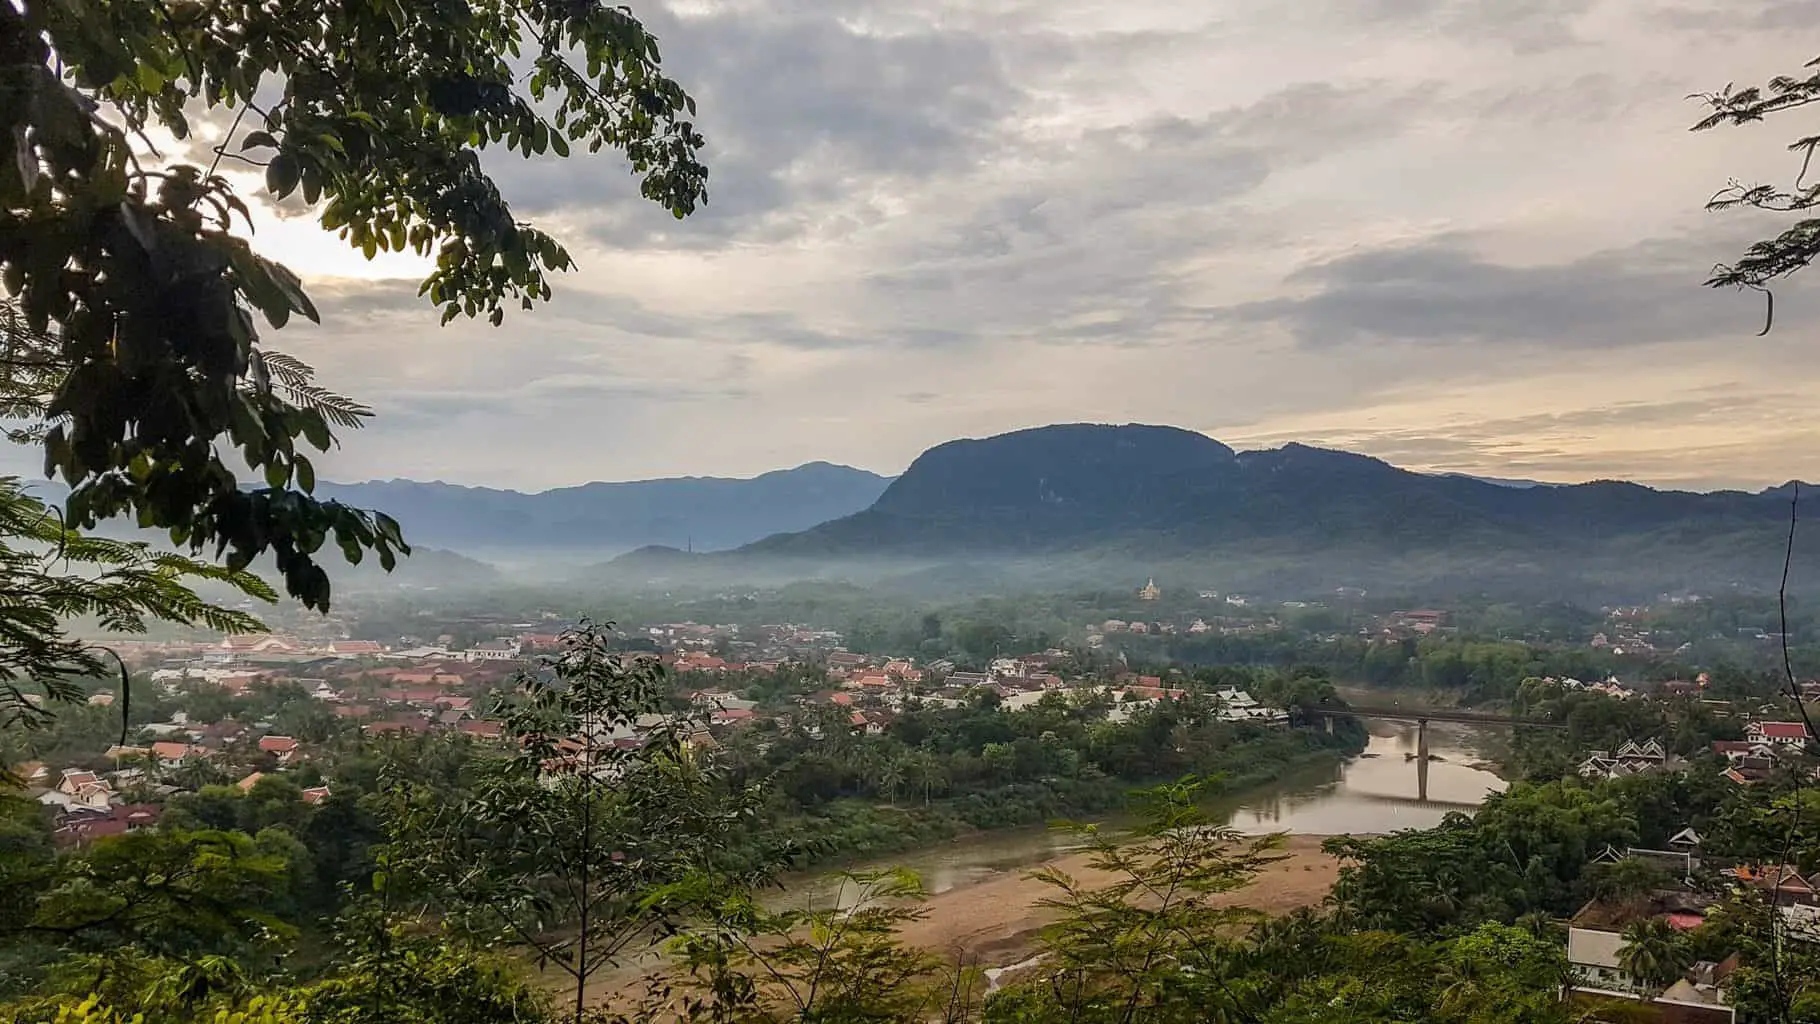 Laos guide for digital nomads